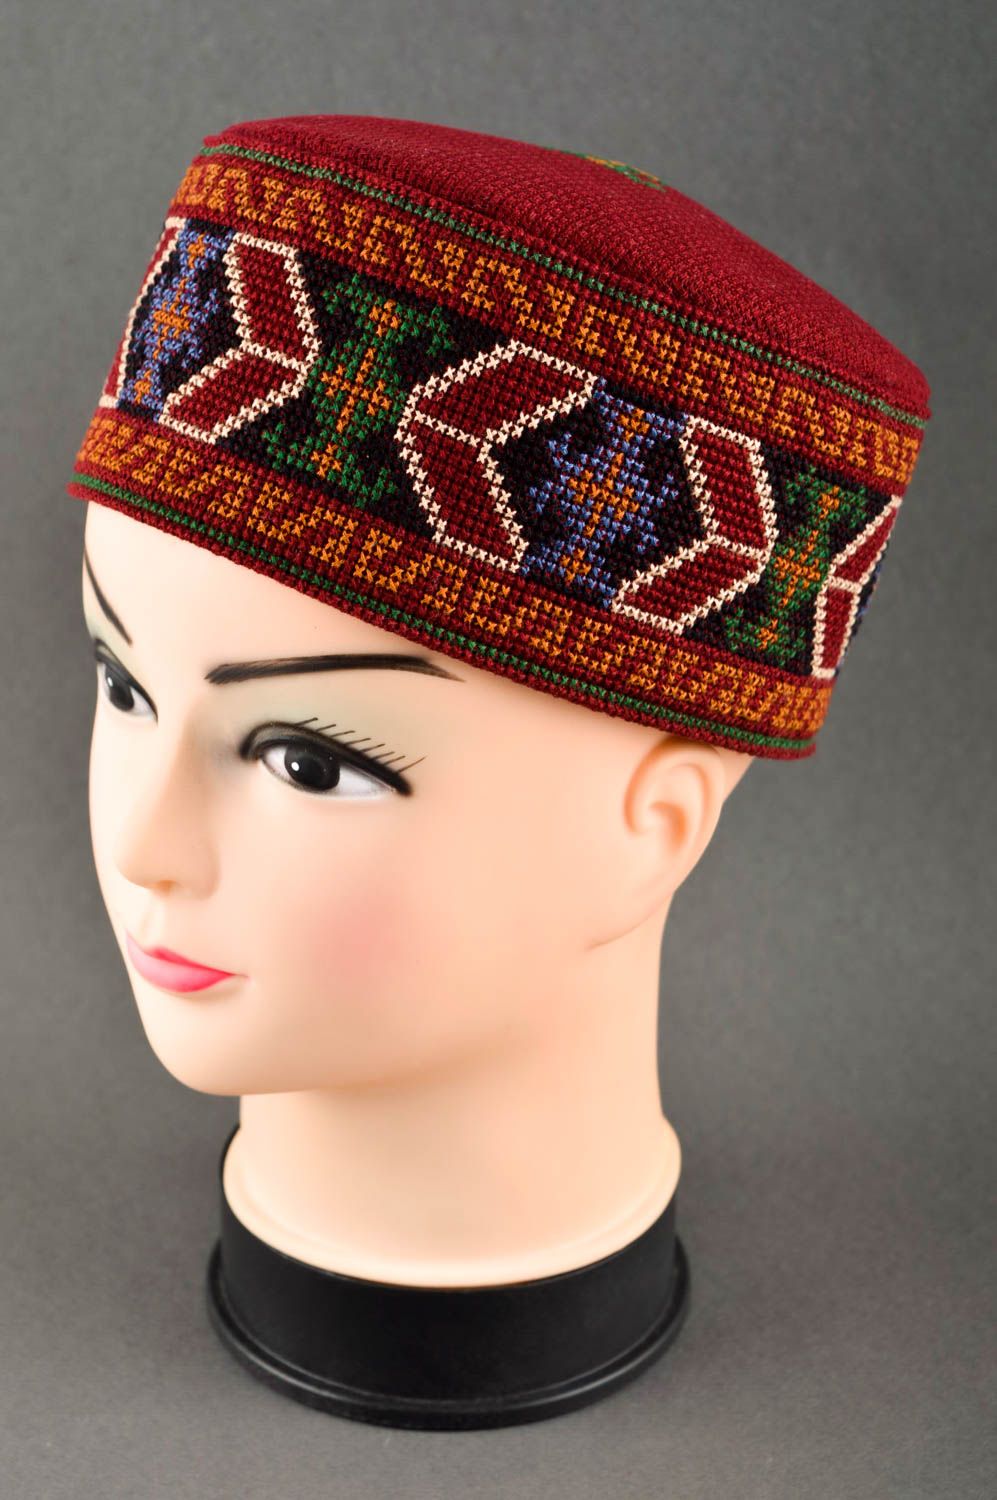 Handmade mens hat textile hat design warm headwear ideas fashion accessories photo 1